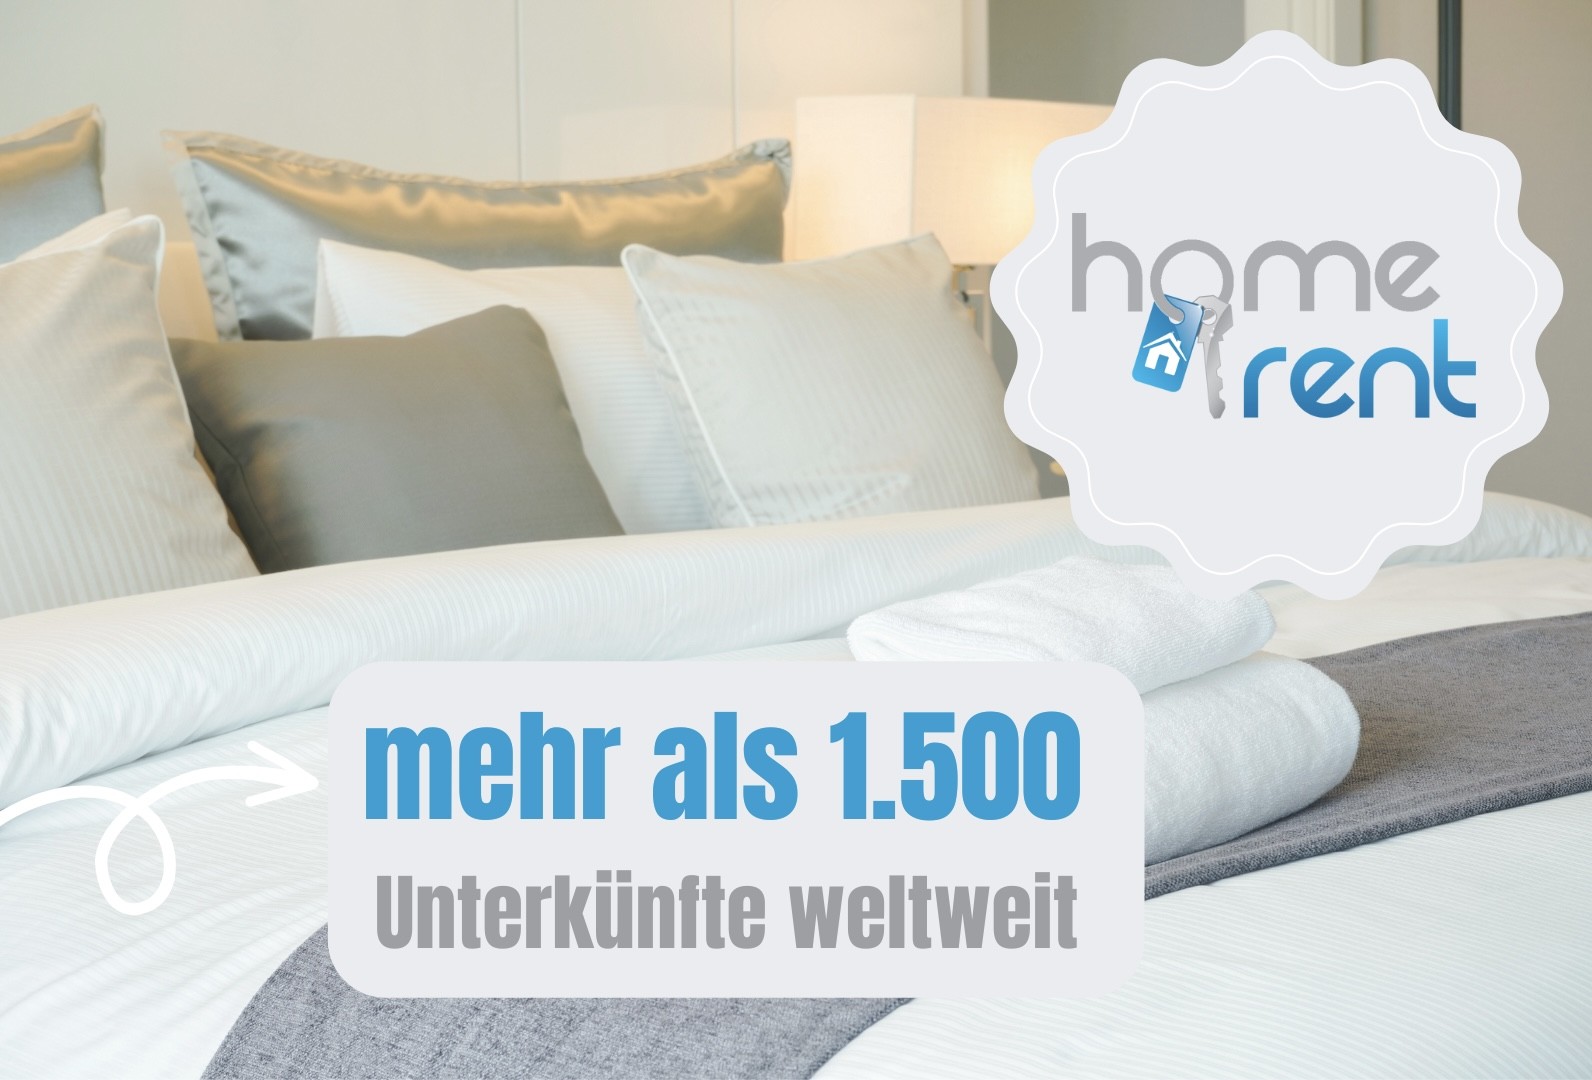 Monteurwohnungen Homerent Niederkassel und Umgebung Homerent Immobilien GmbH 53859 169163973664d45fb8de895